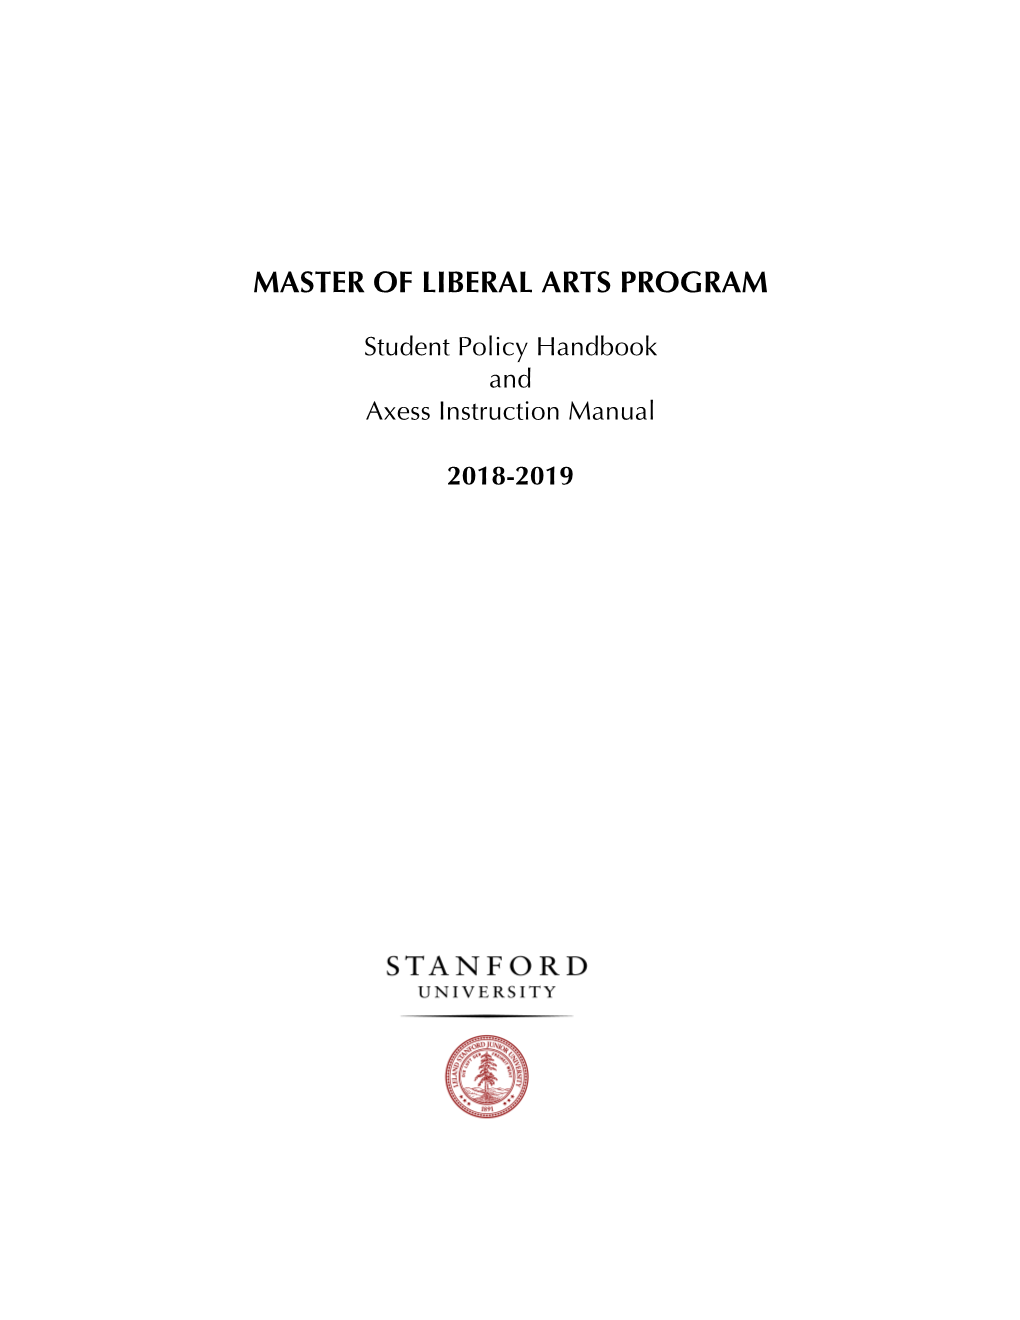 Master of Liberal Arts Program